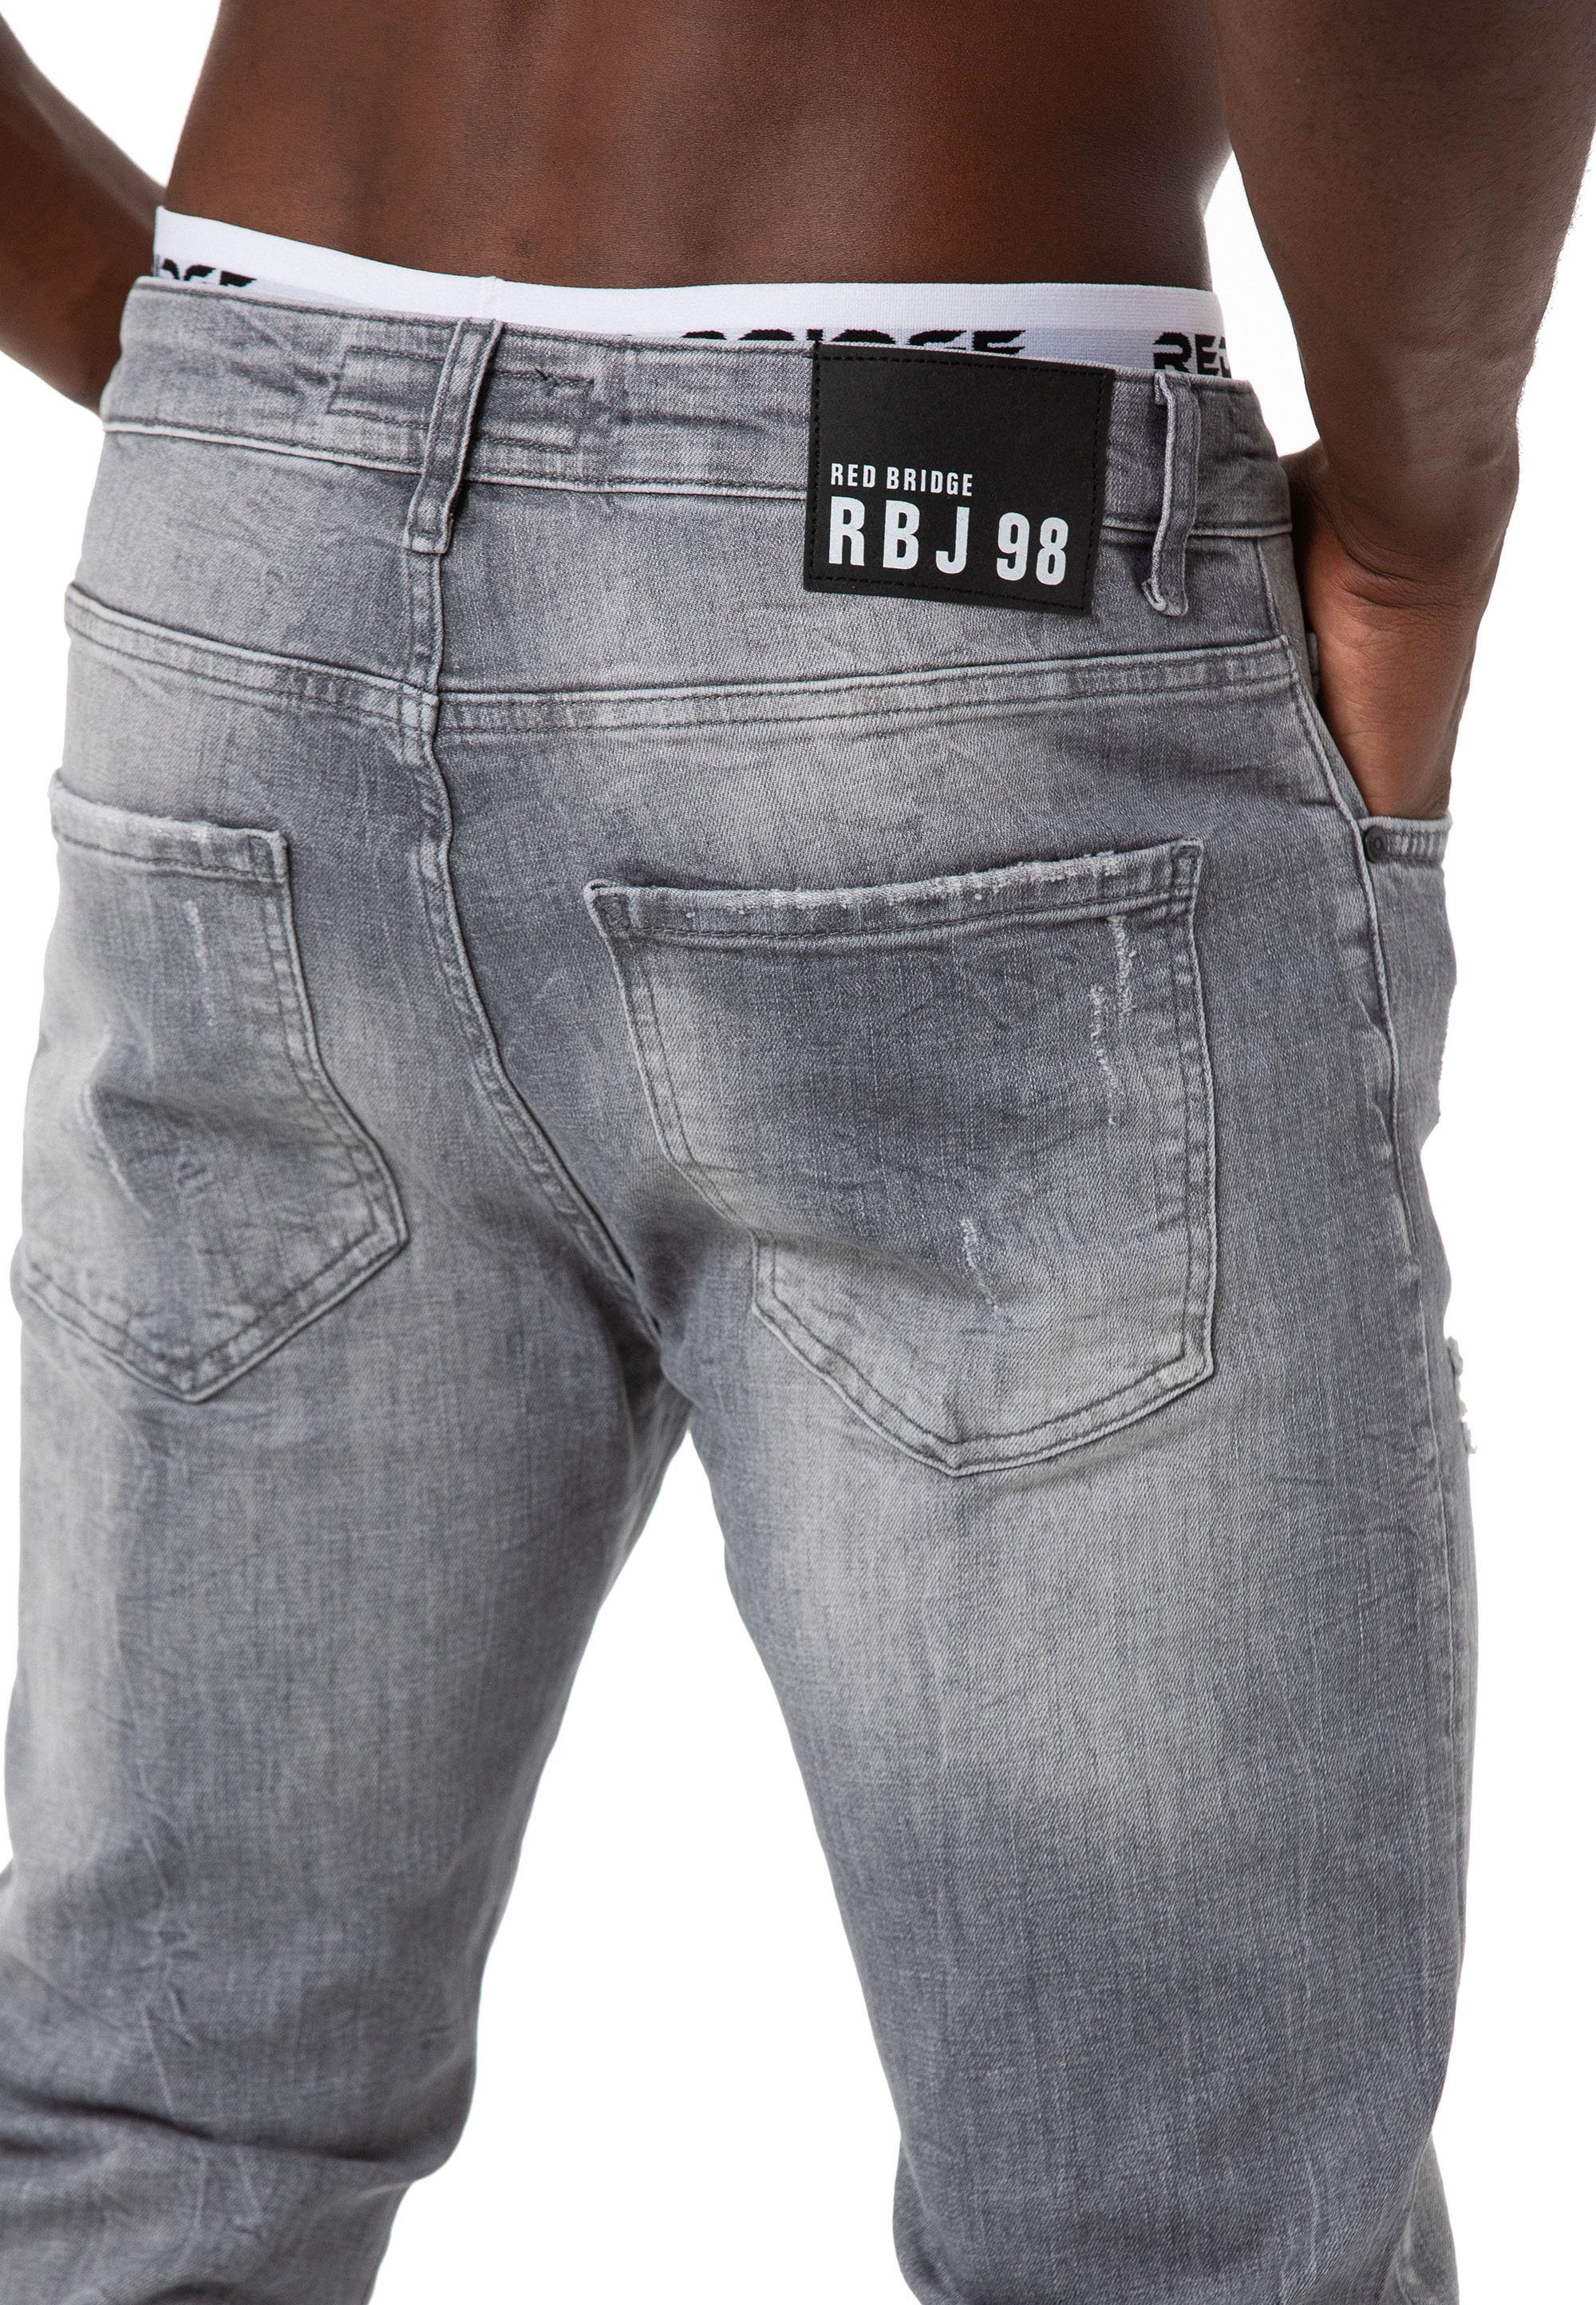 Slim-fit-Jeans RedBridge Grau Distressed-Look Pants Hose Denim Straight Leg